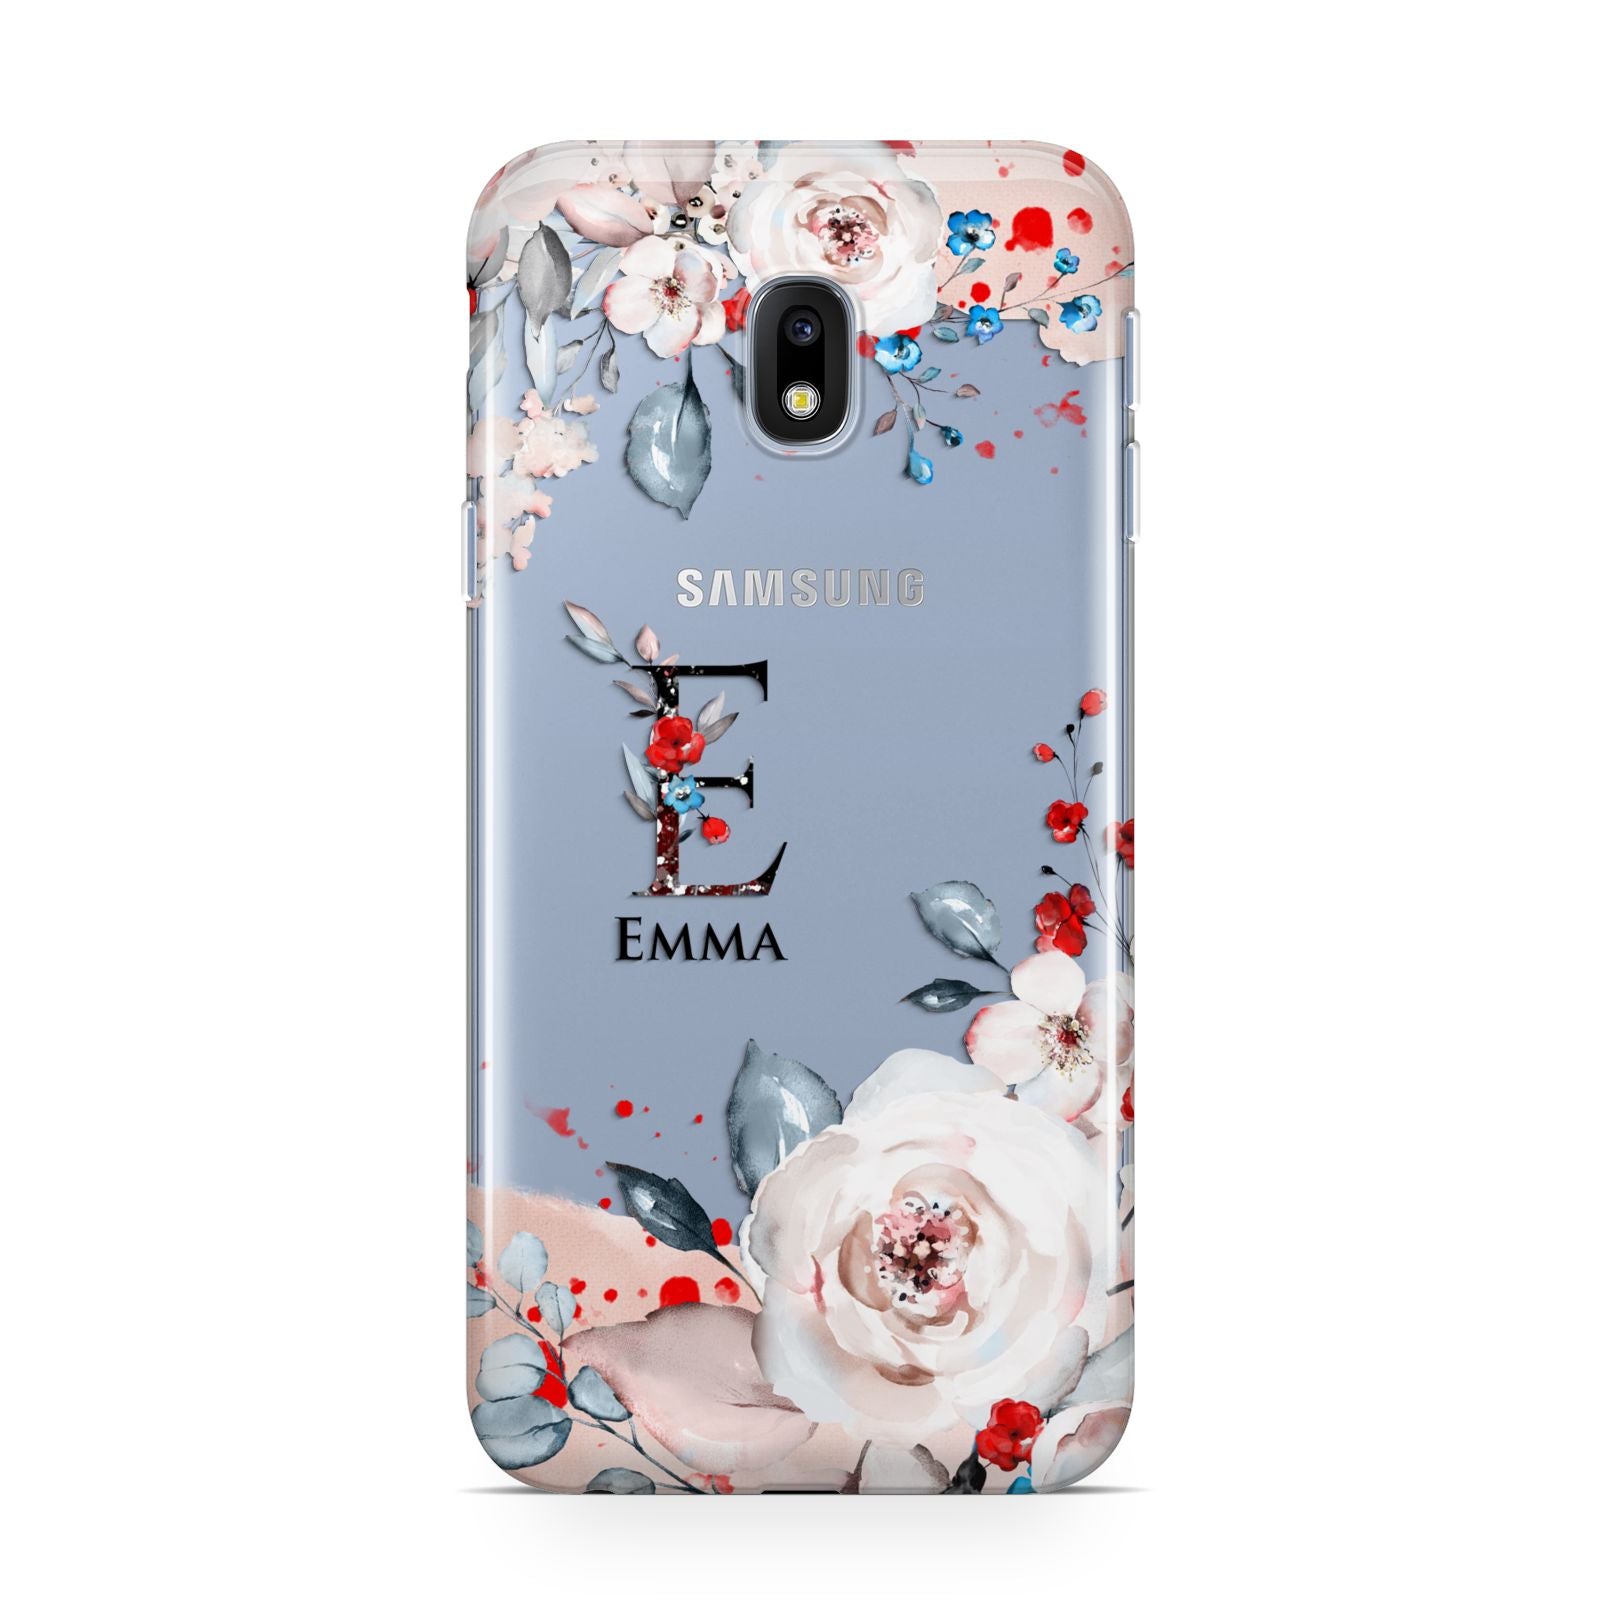 Monogrammed Roses Floral Wreath Samsung Galaxy J3 2017 Case